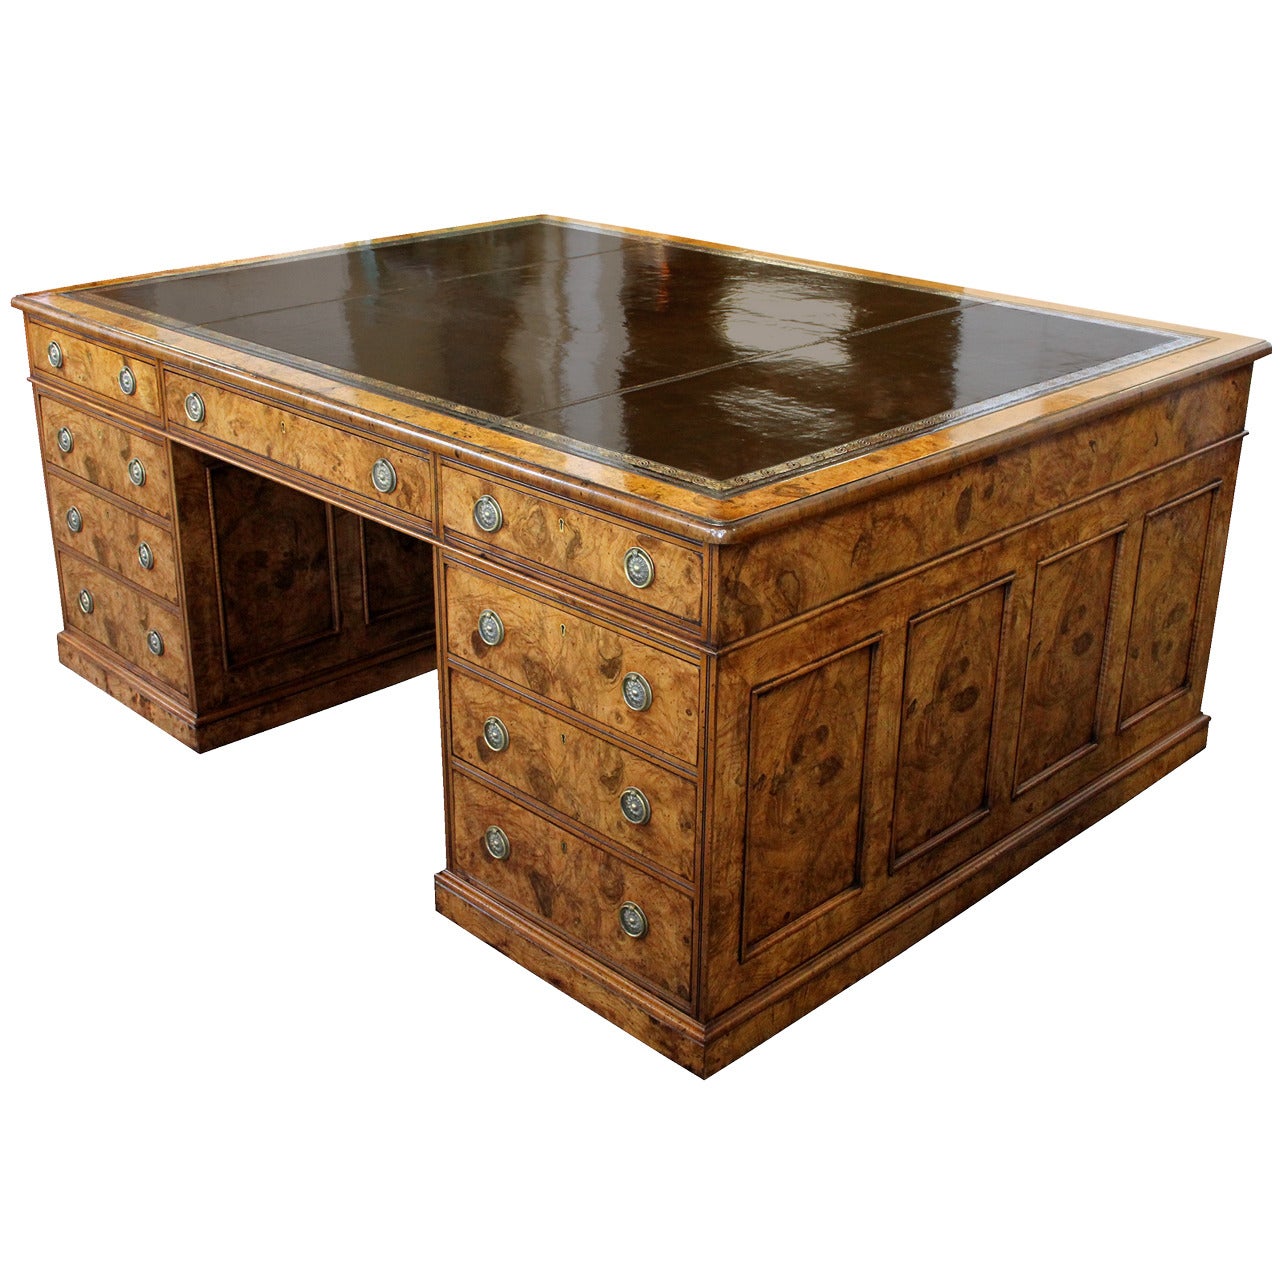 An Impressive 19th Century English Olive Wood Partners' Desk